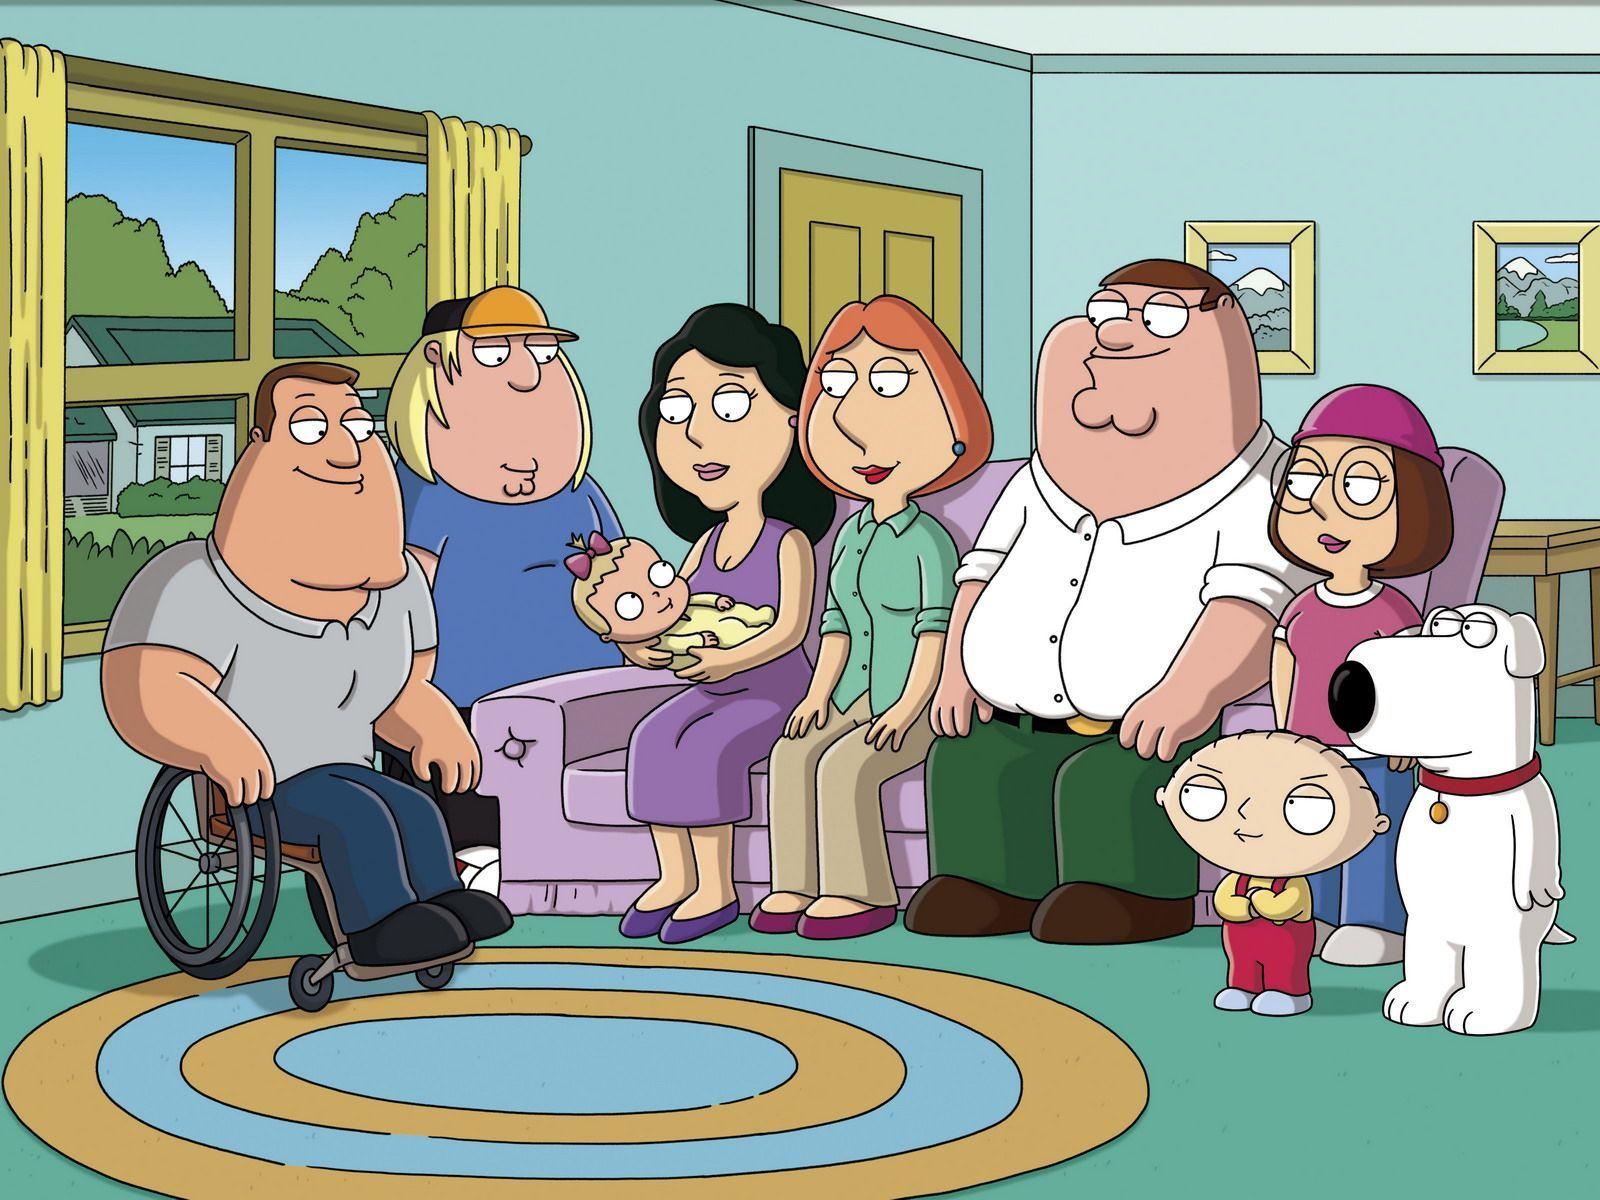 Family Guy wallpaper HD. Wallpaper desktop, Free download wallpaper